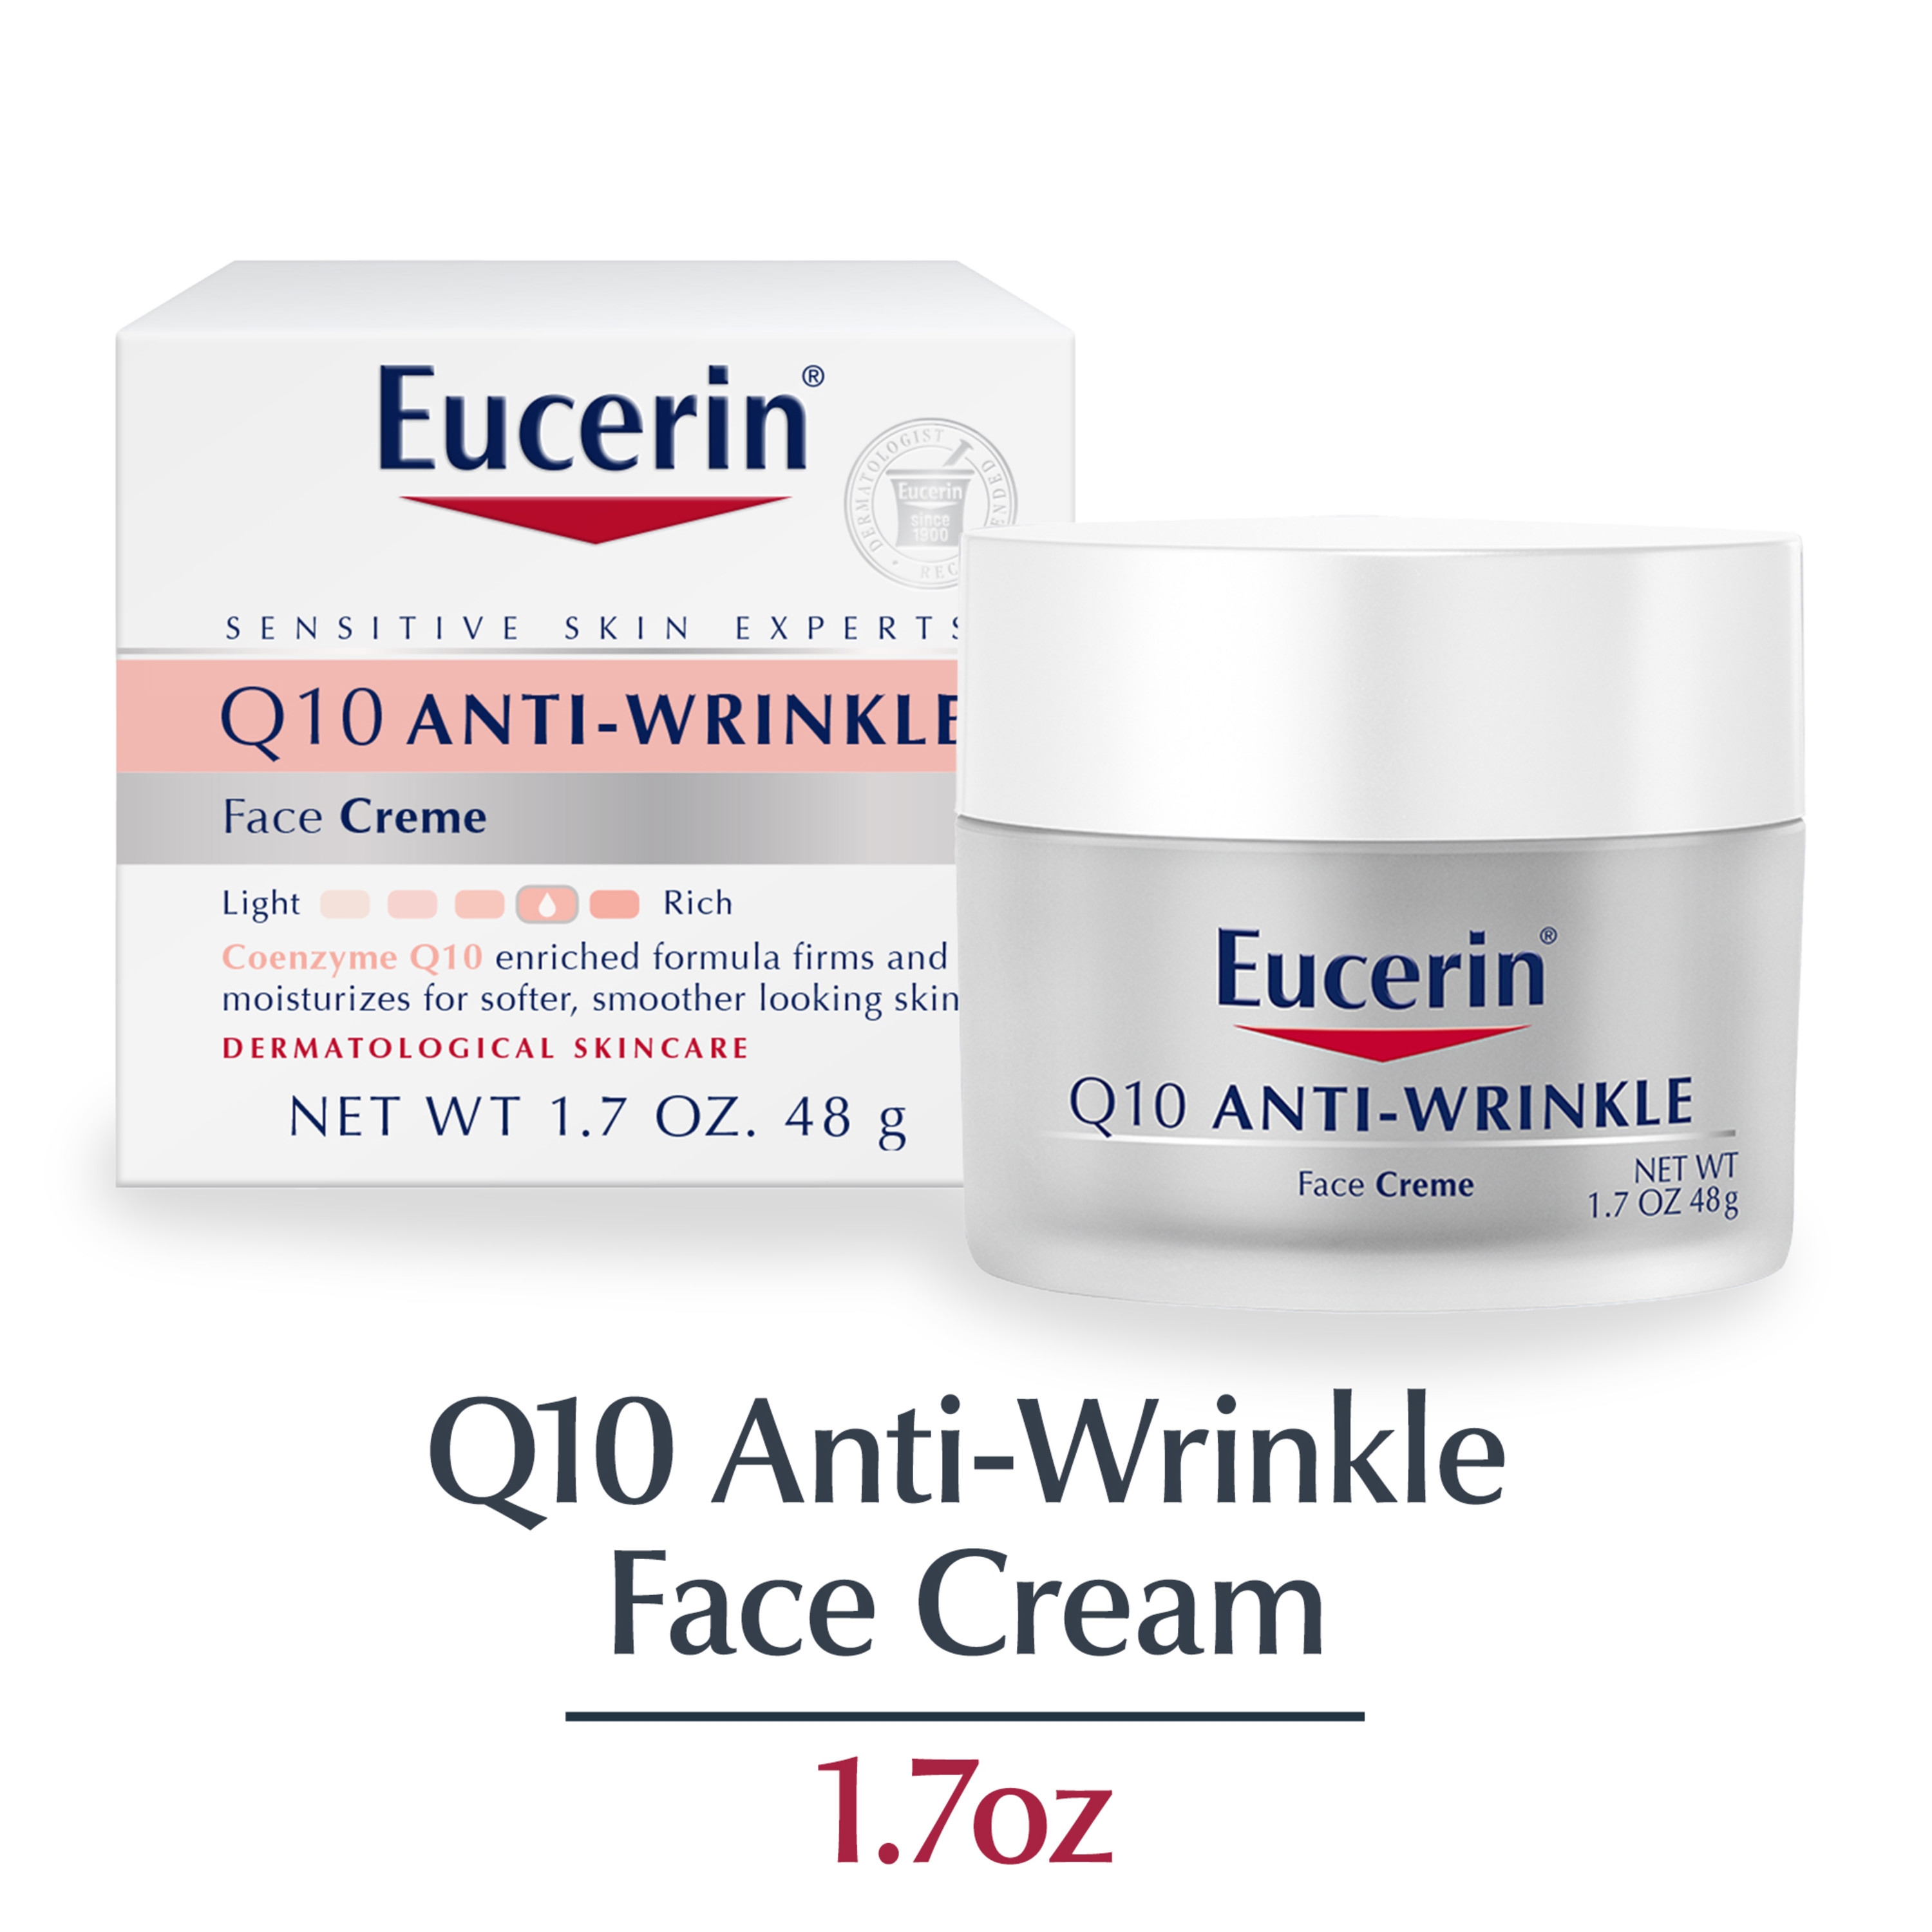 Eucerin Q10 Anti-Wrinkle Face Cream for Sensitive Skin, 1.7 Oz Jar - image 1 of 15